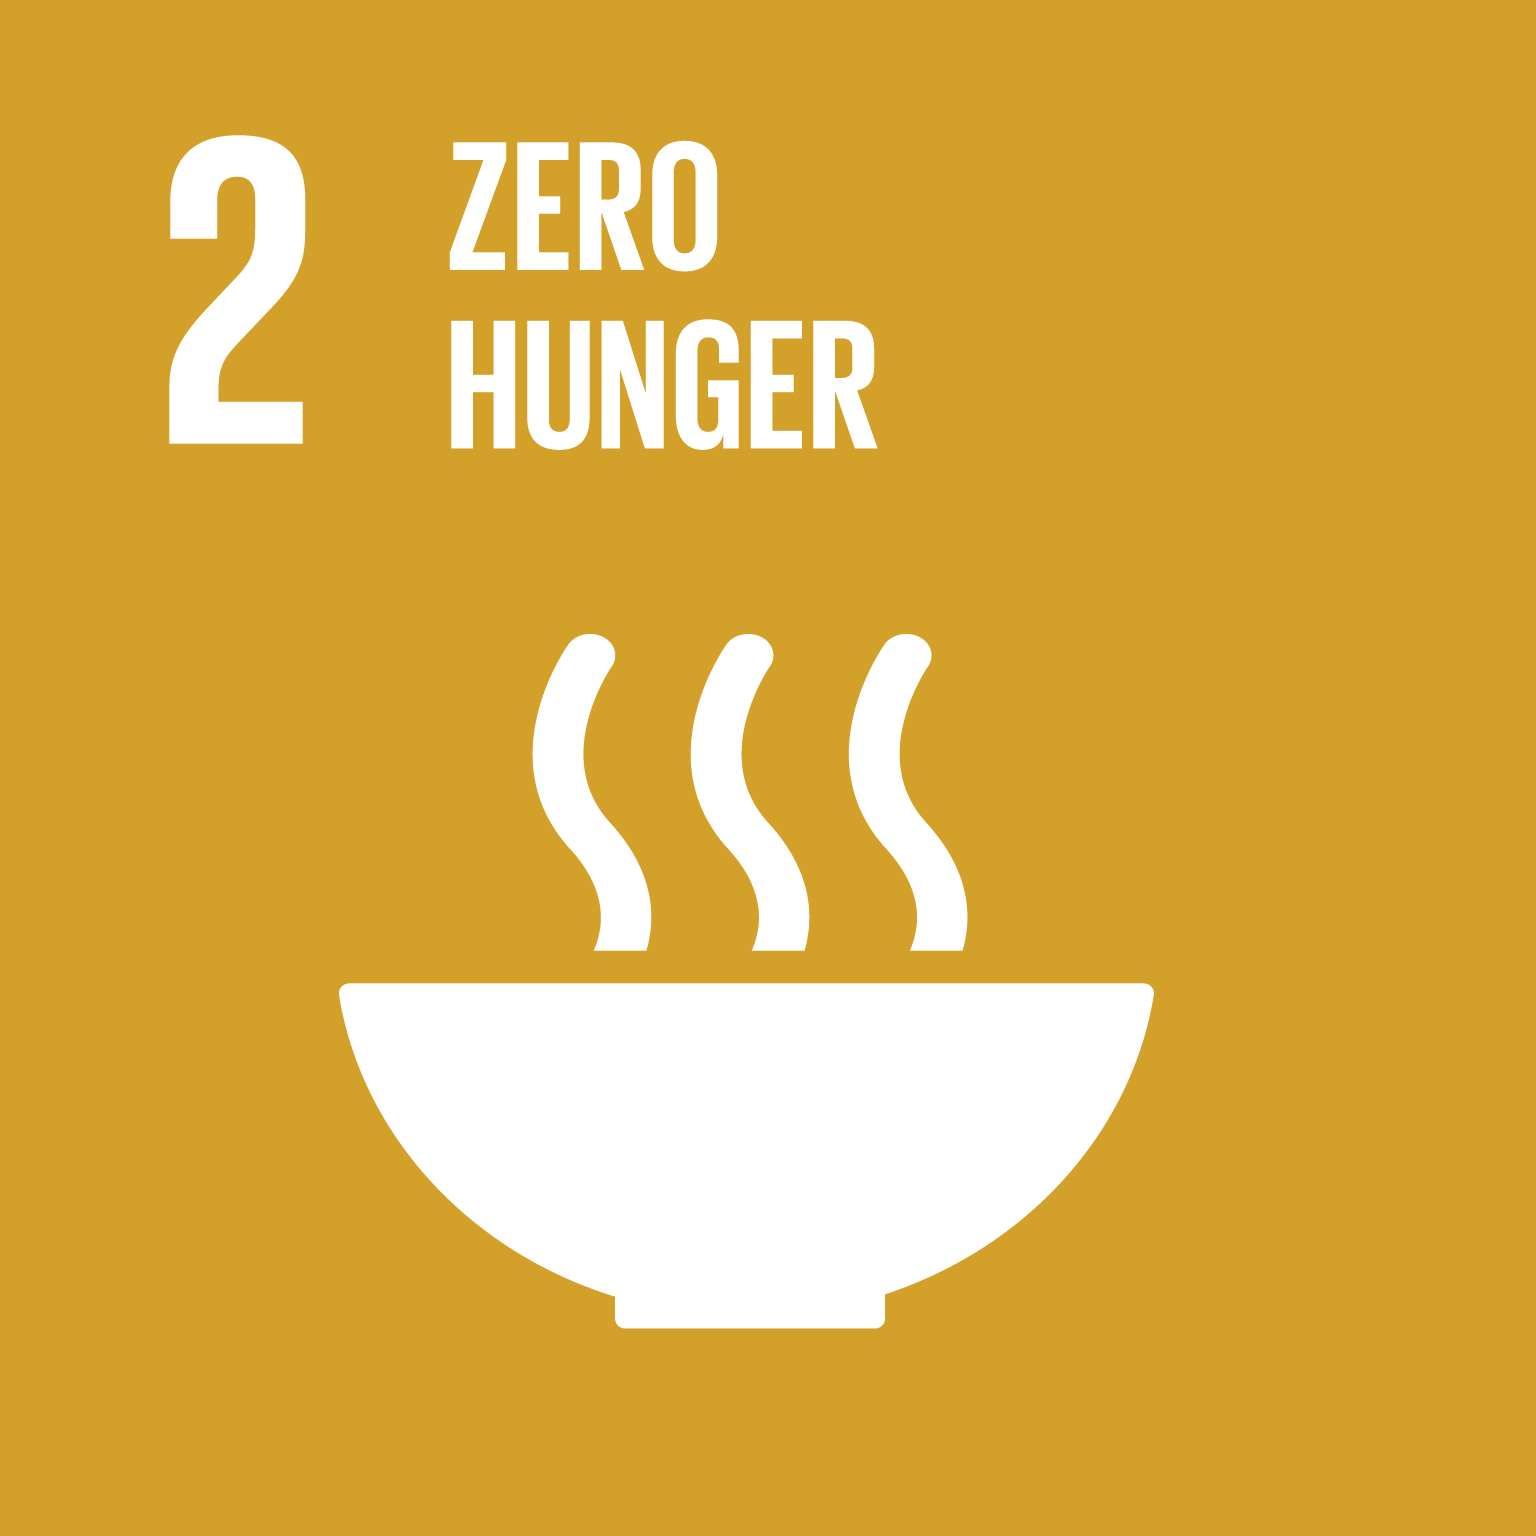 Sustainable Development Goal 2: Zero hunger